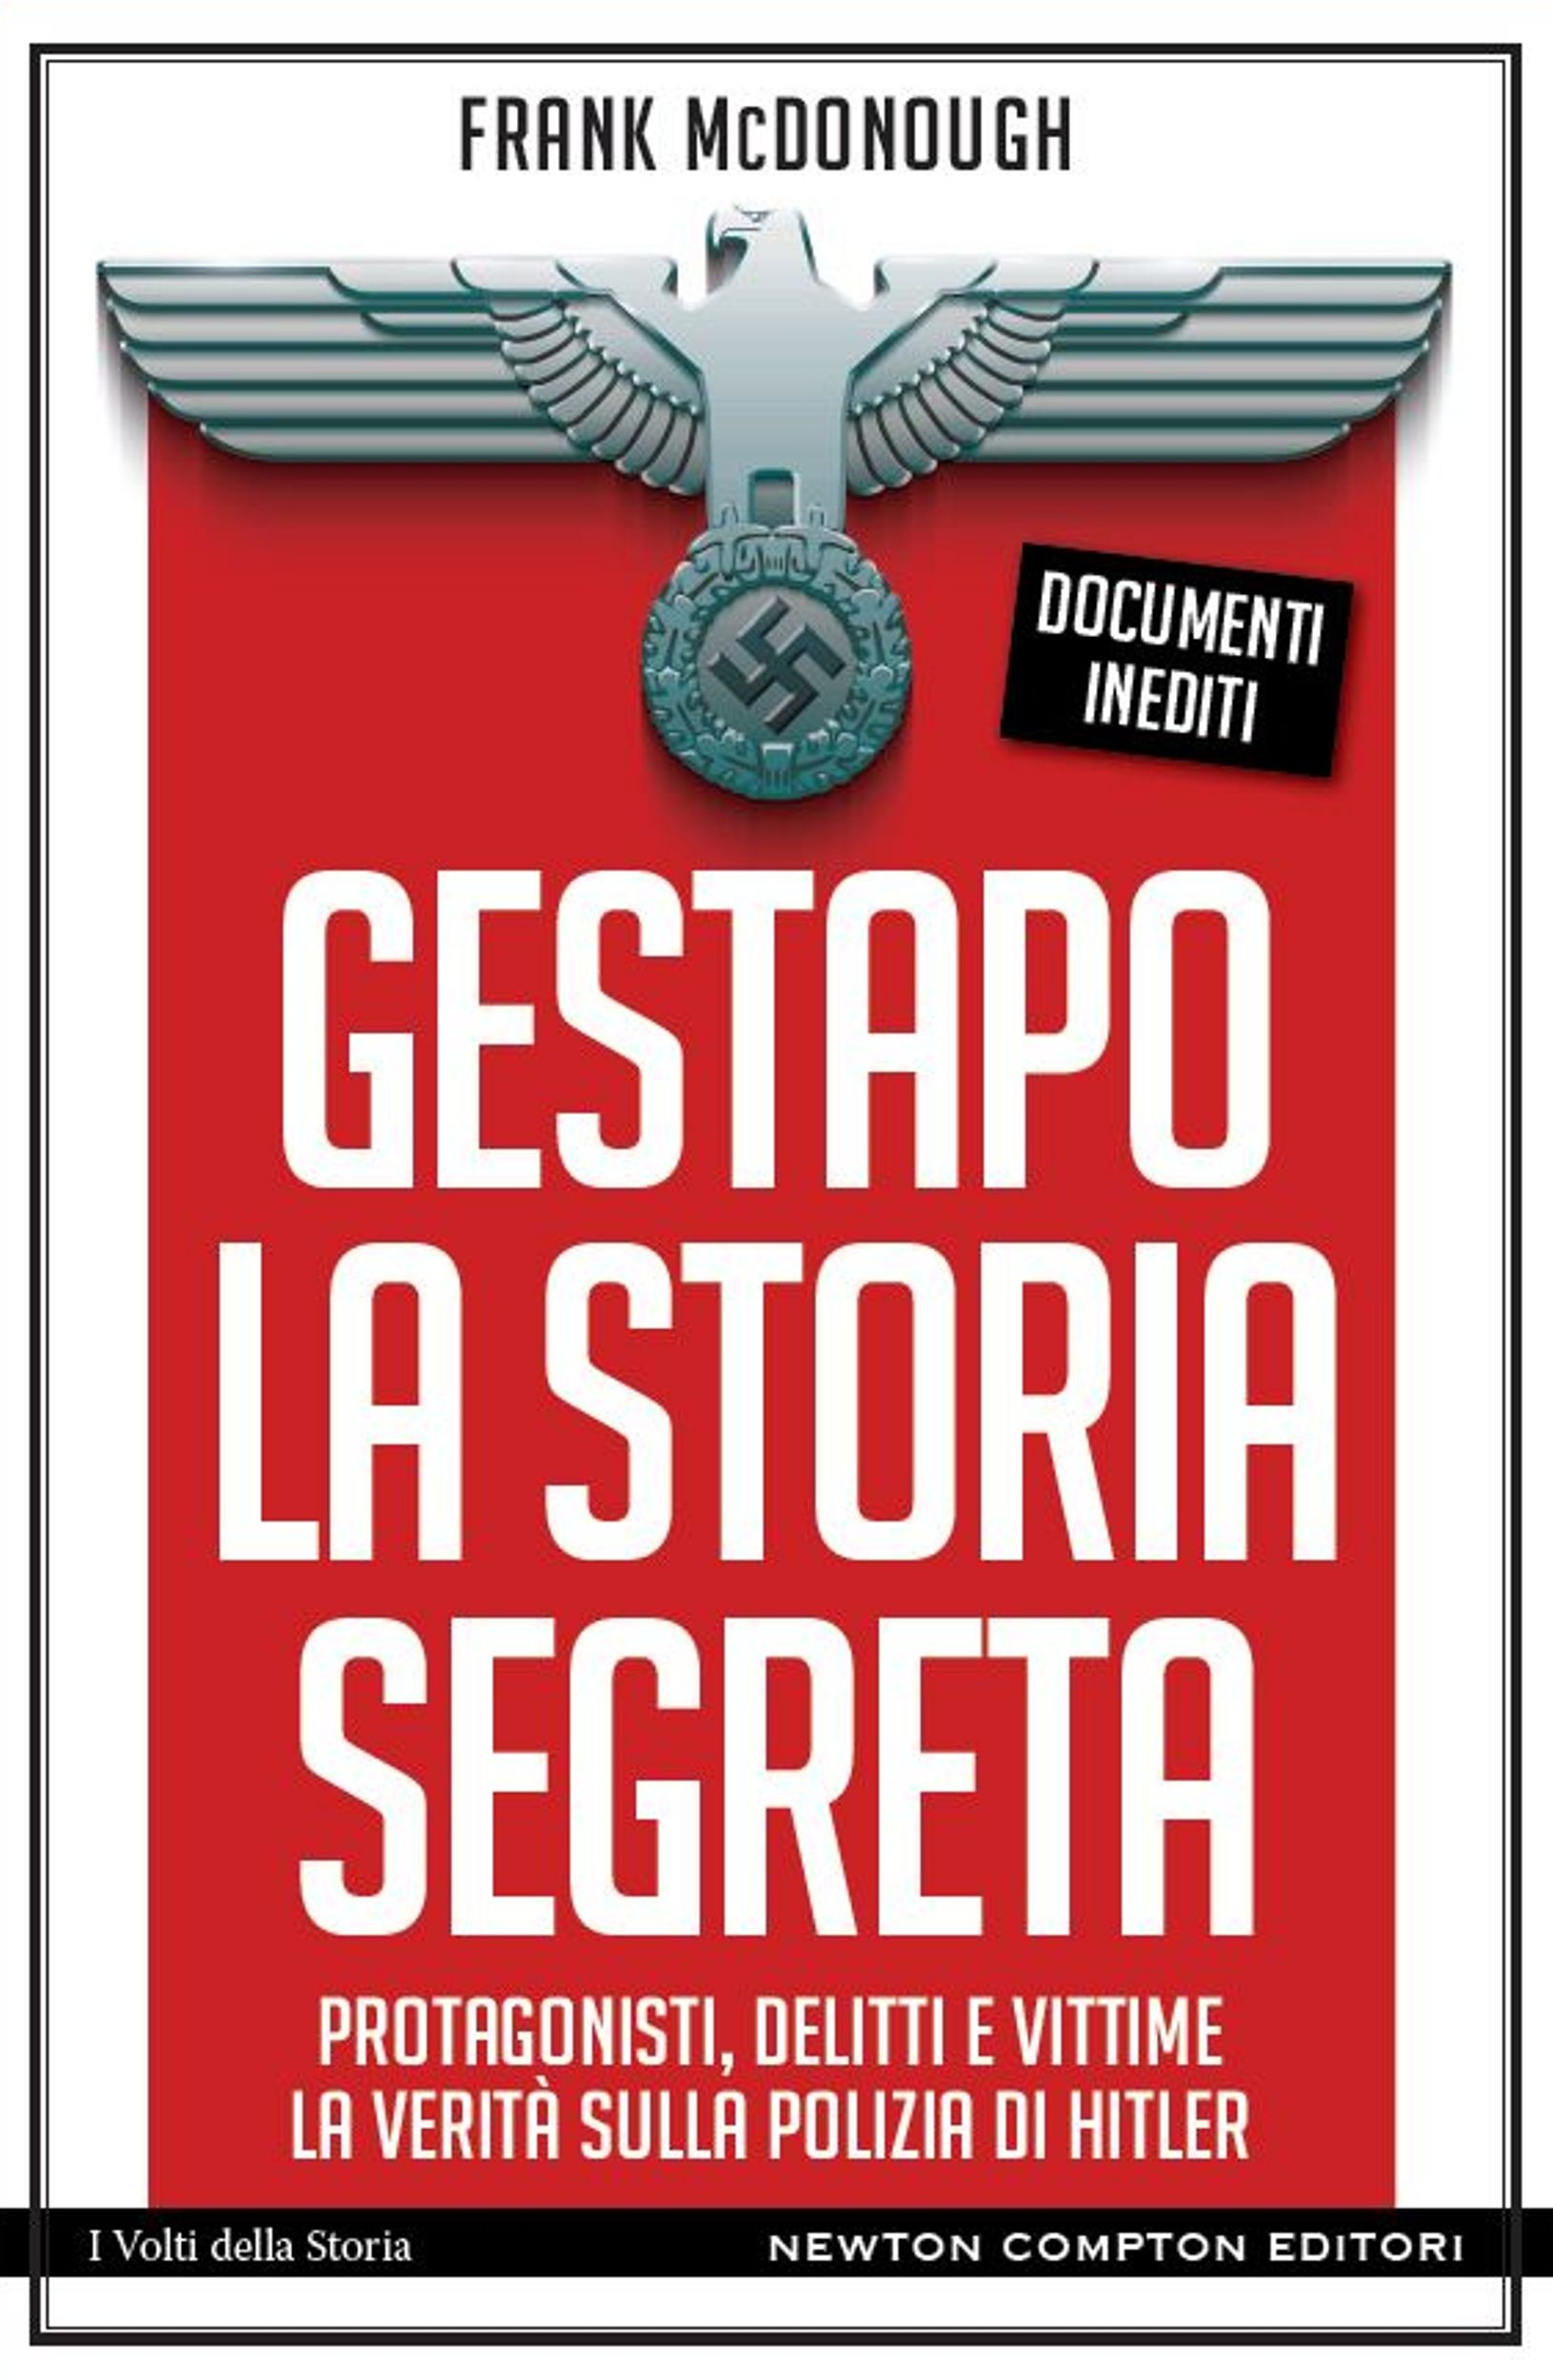 Gestapo. La storia segreta - Librerie.coop